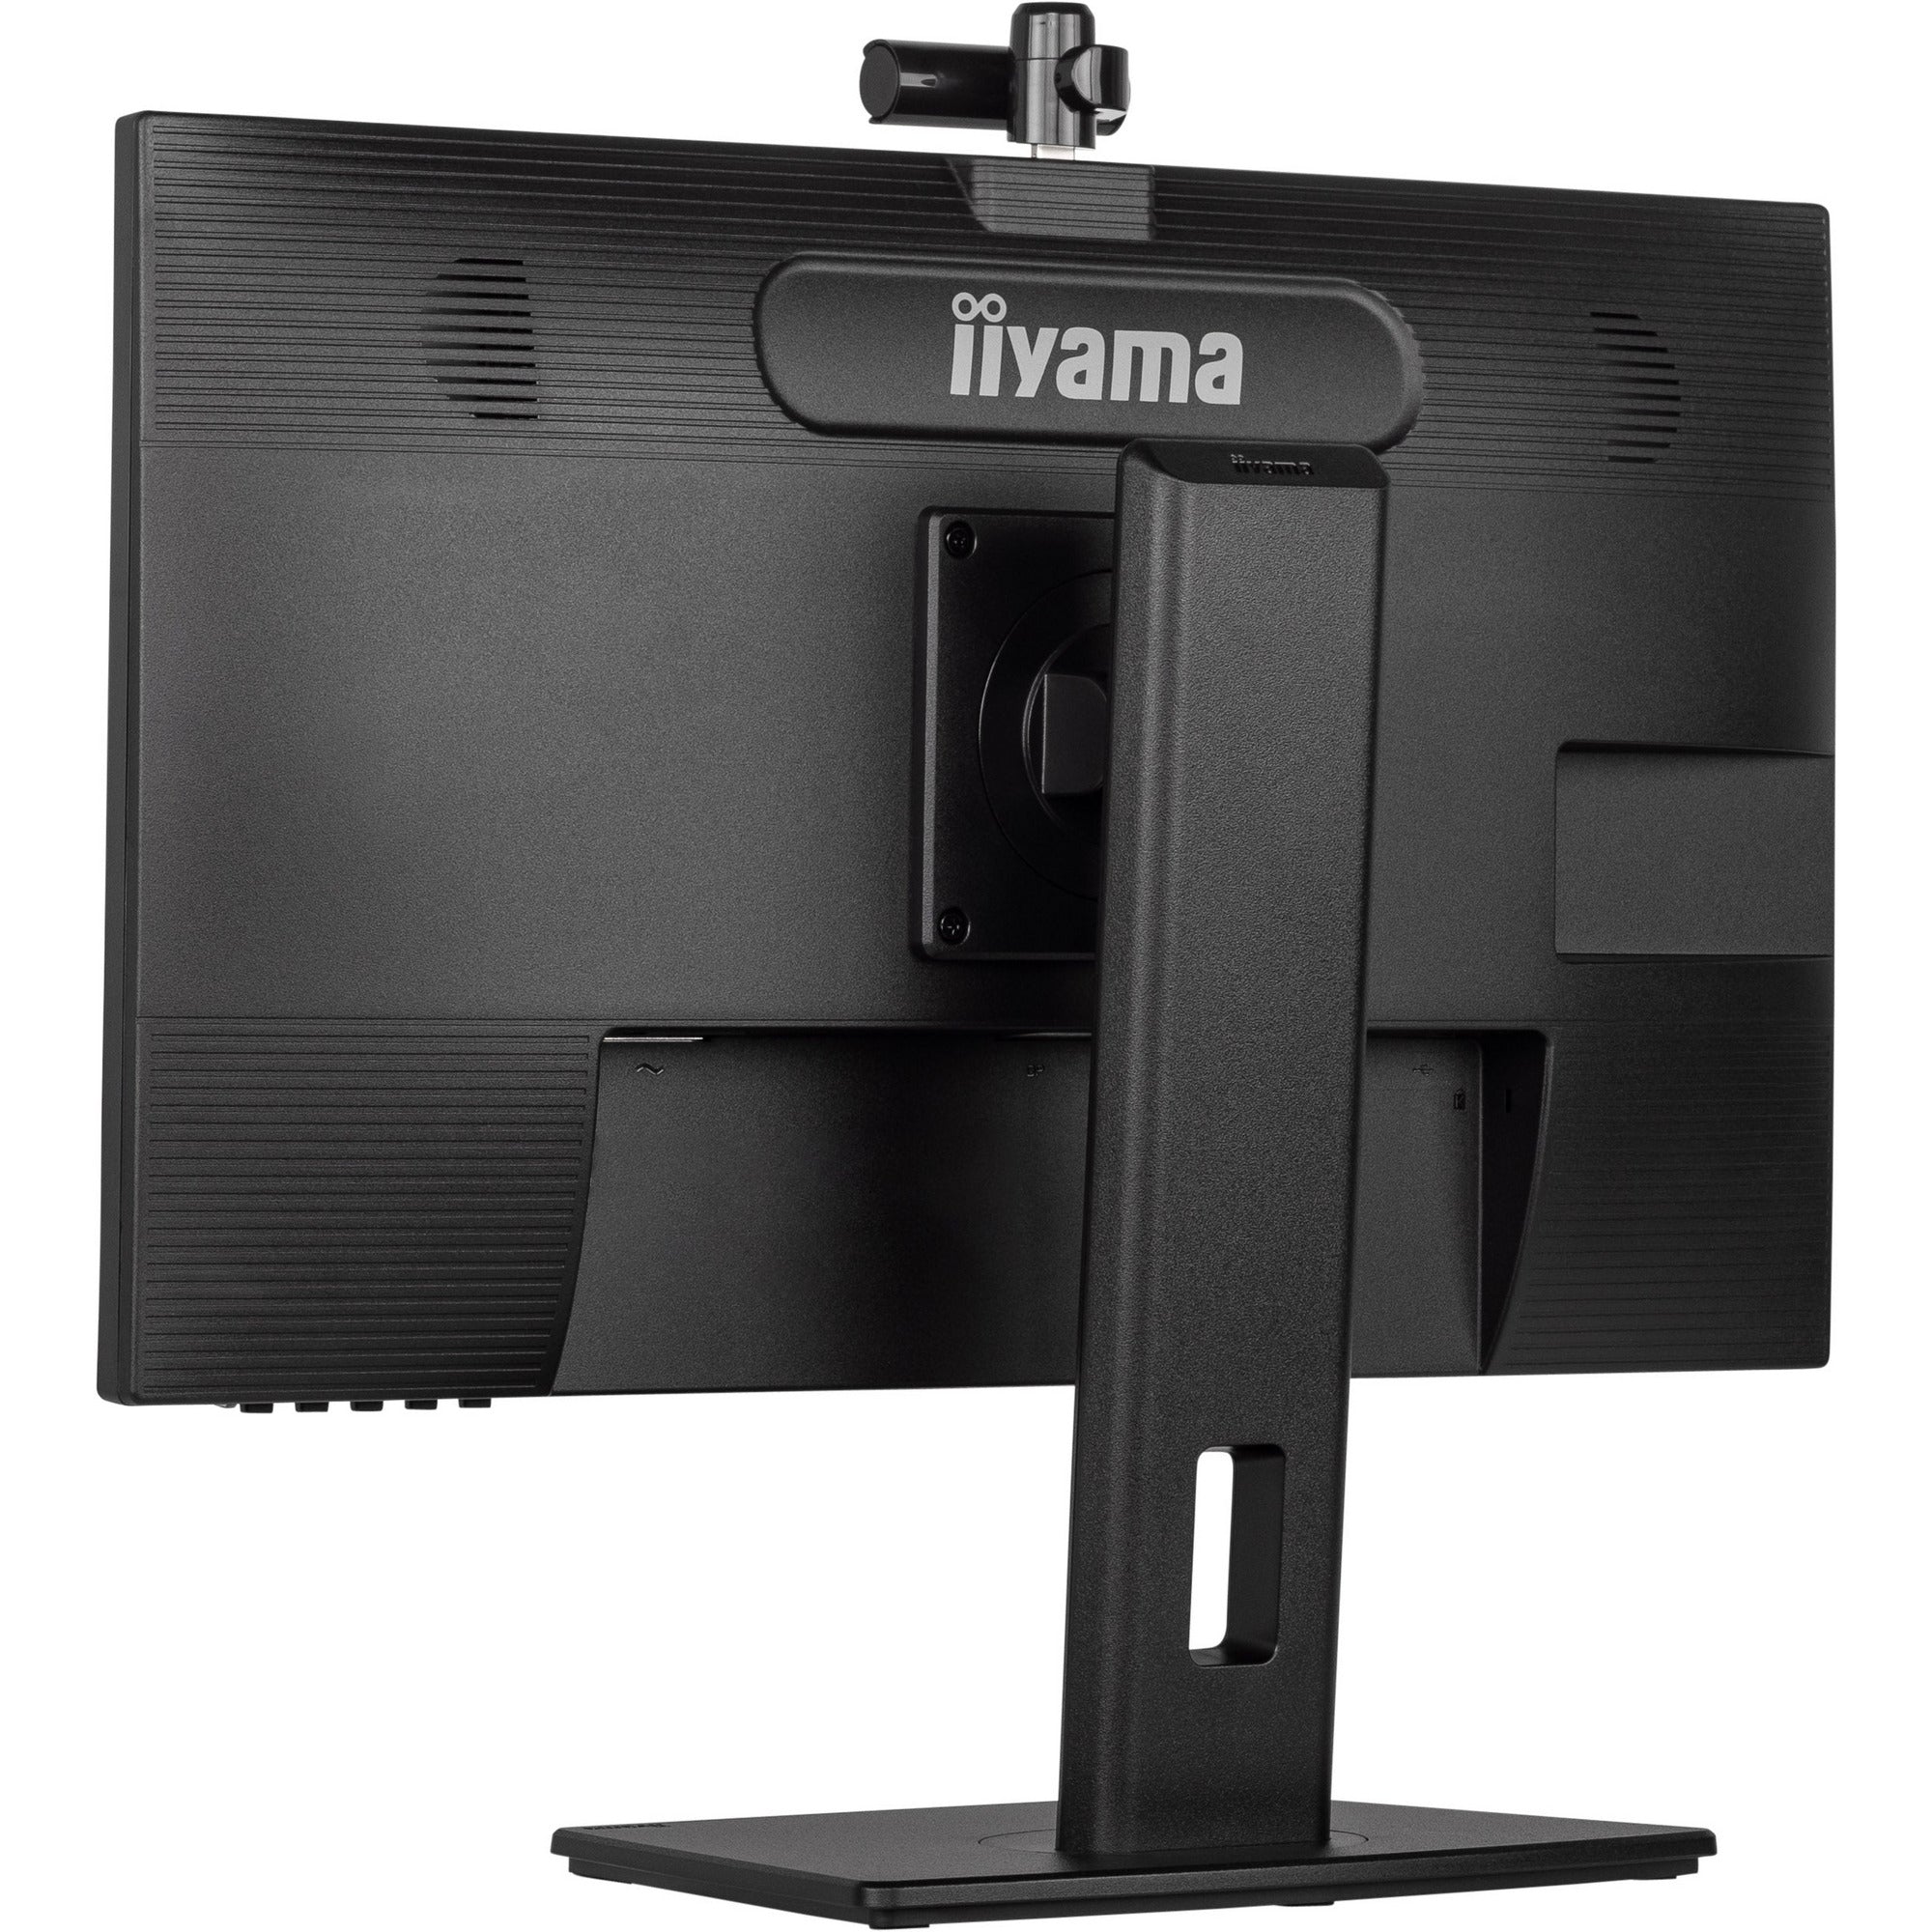 iiyama ProLite XUB2490HSUC-B5 24" IPS LCD Monitor with FHD Webcam